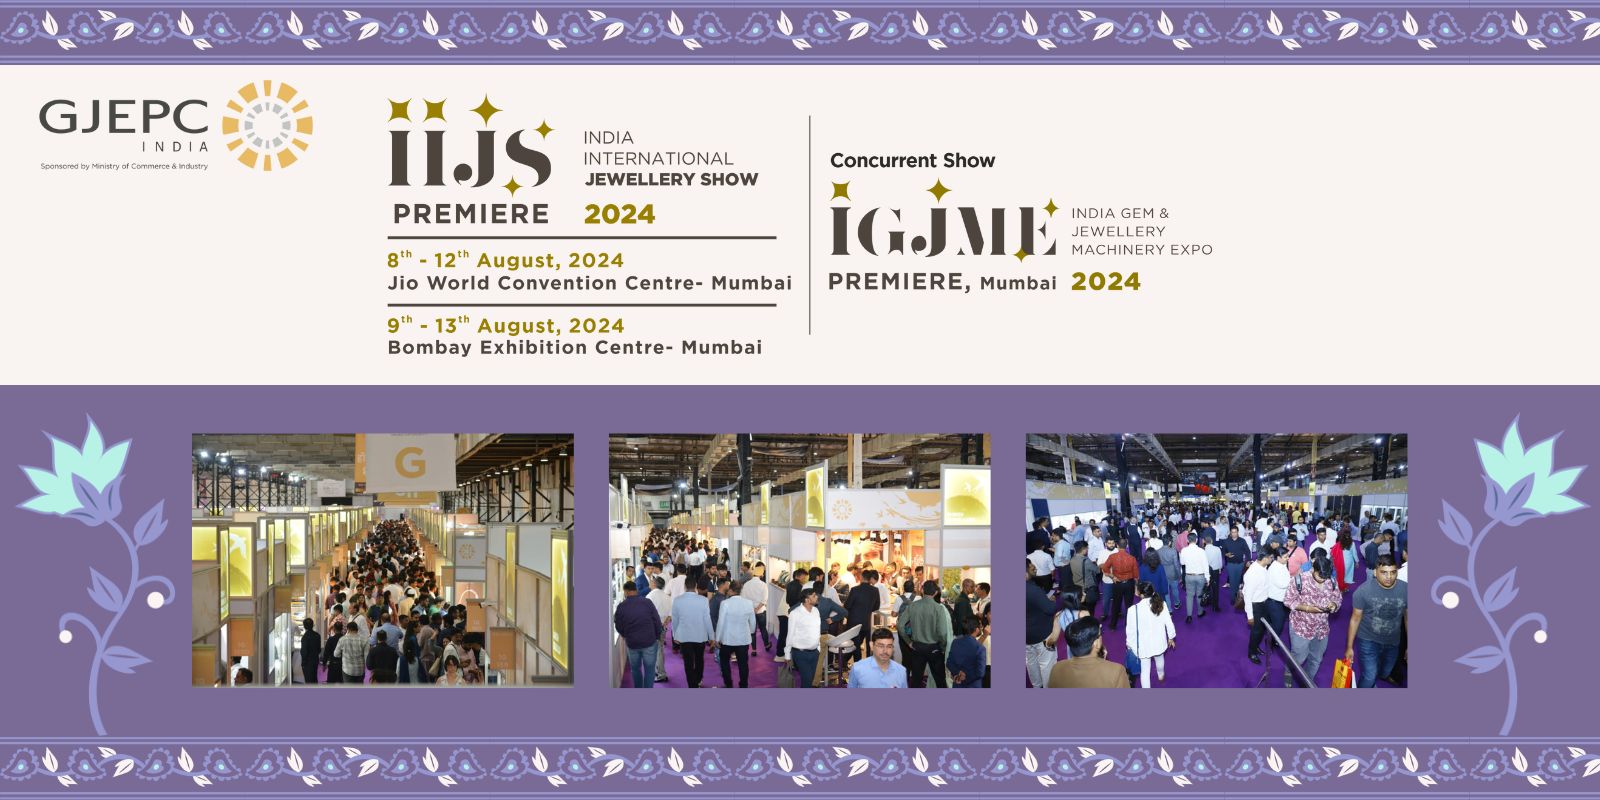 India International Jewellery Show (IIJS Premiere 2024)